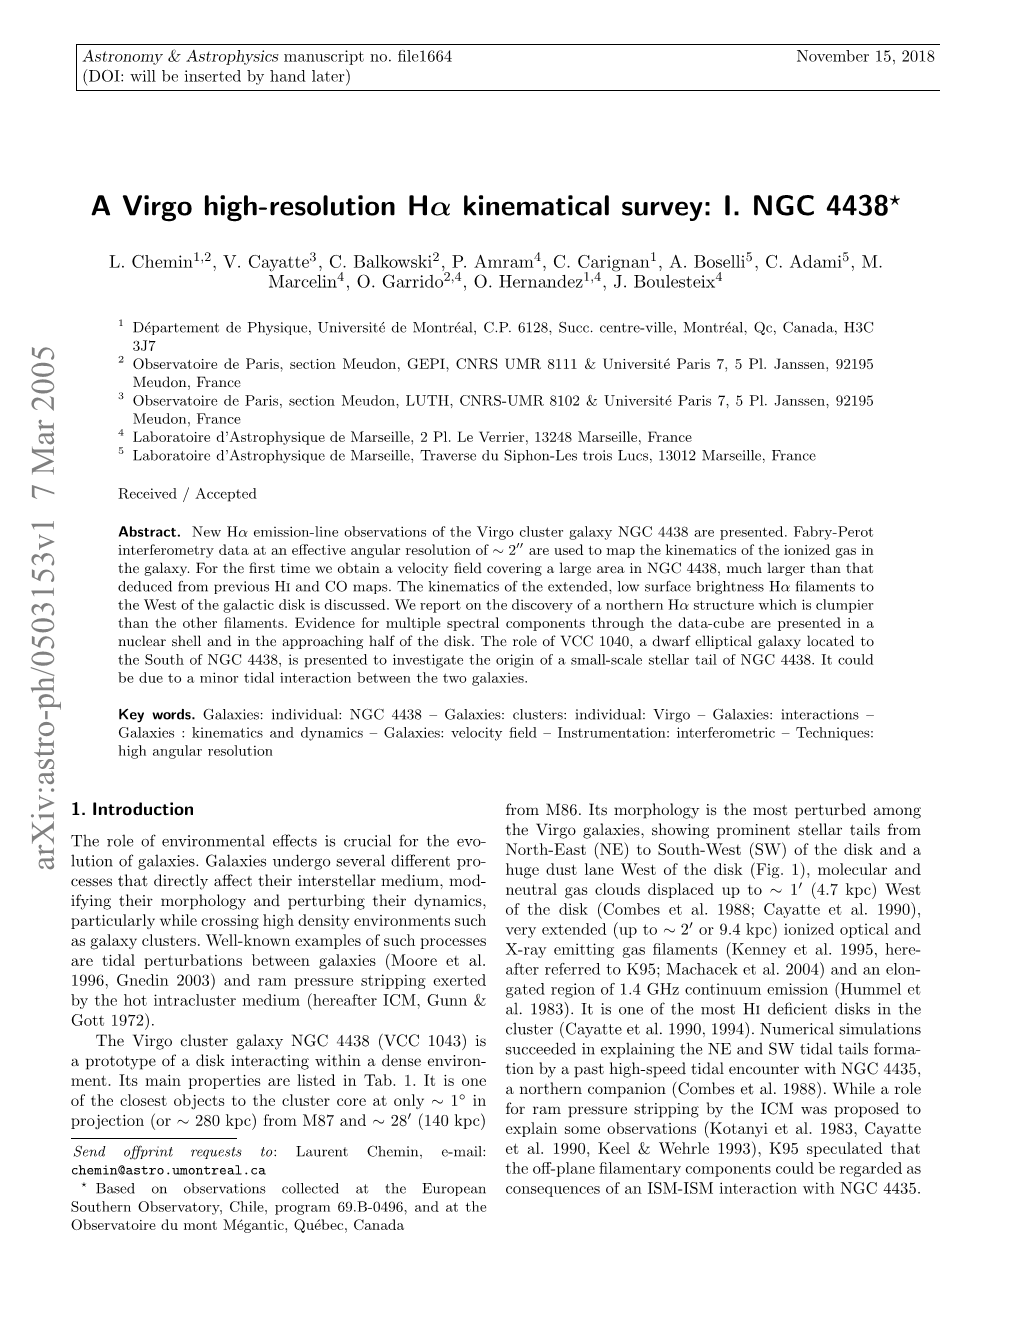 A Virgo High-Resolution Halpha Kinematical Survey: I. NGC 4438